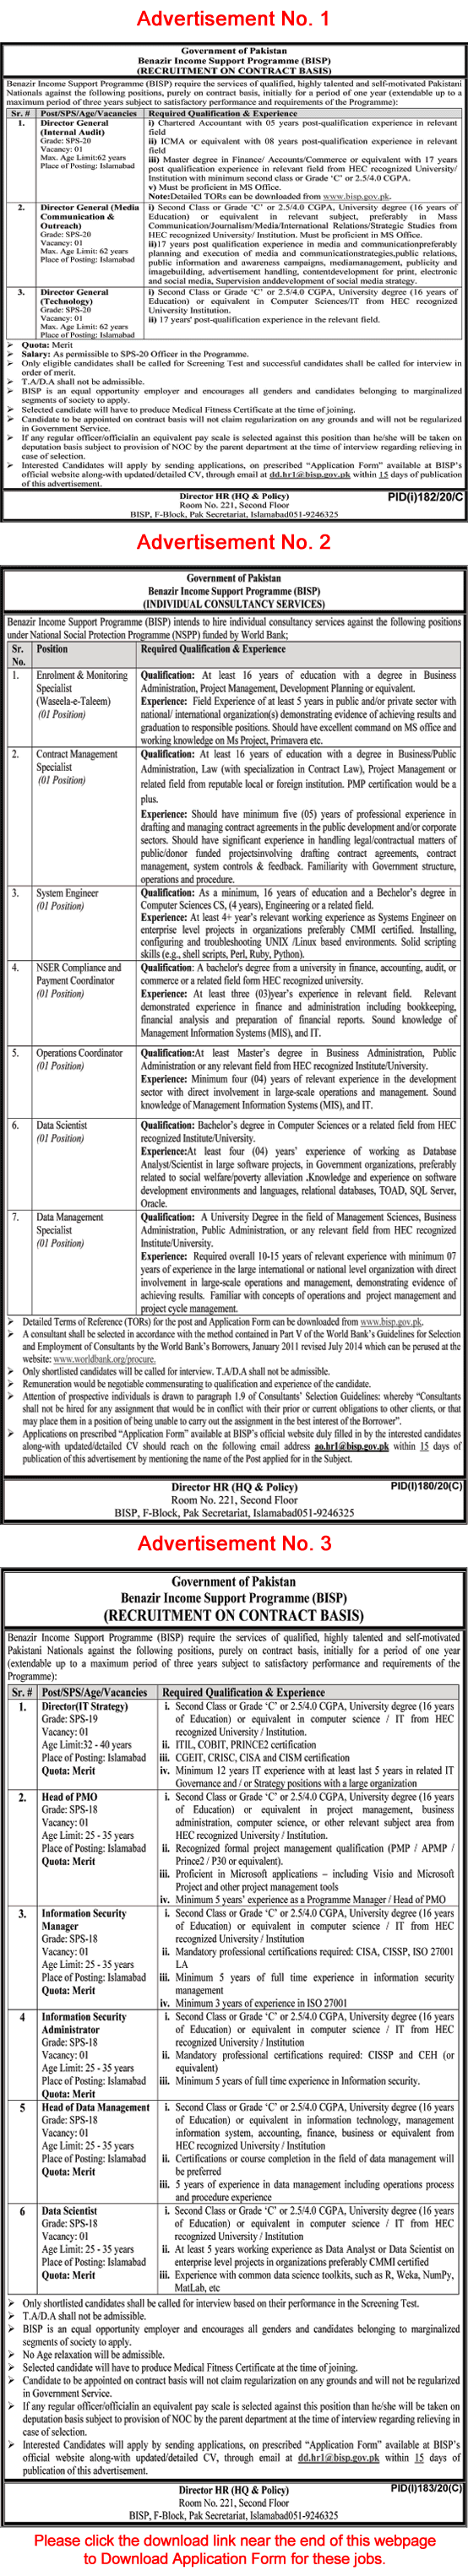 BISP Jobs July 2020 Application Form Benazir Income Support Programme Latest